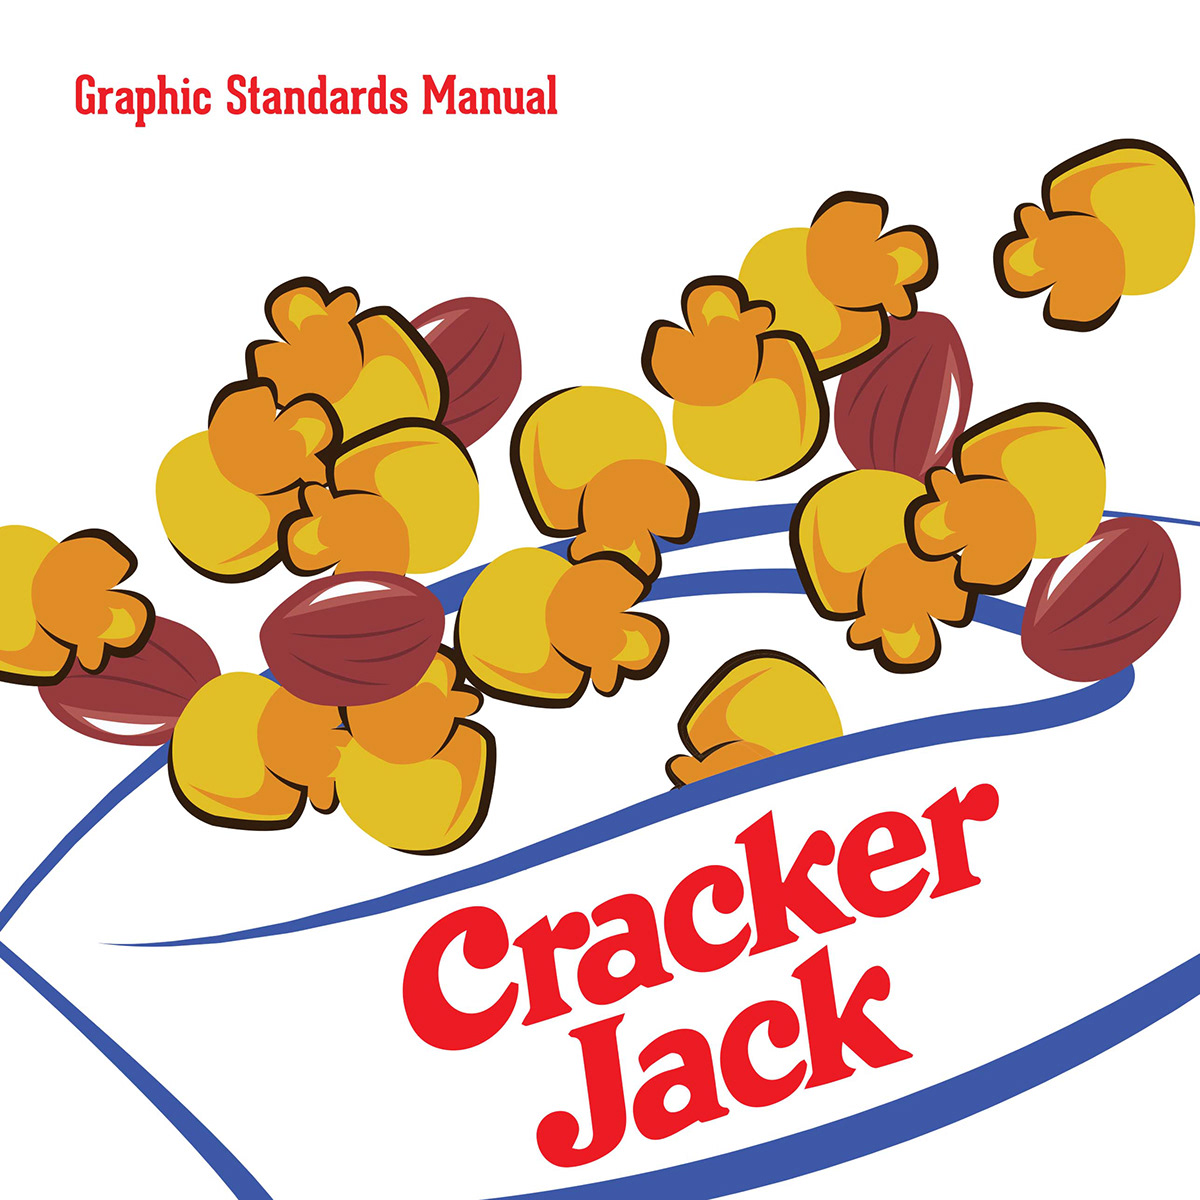 Cracker jack re-branding